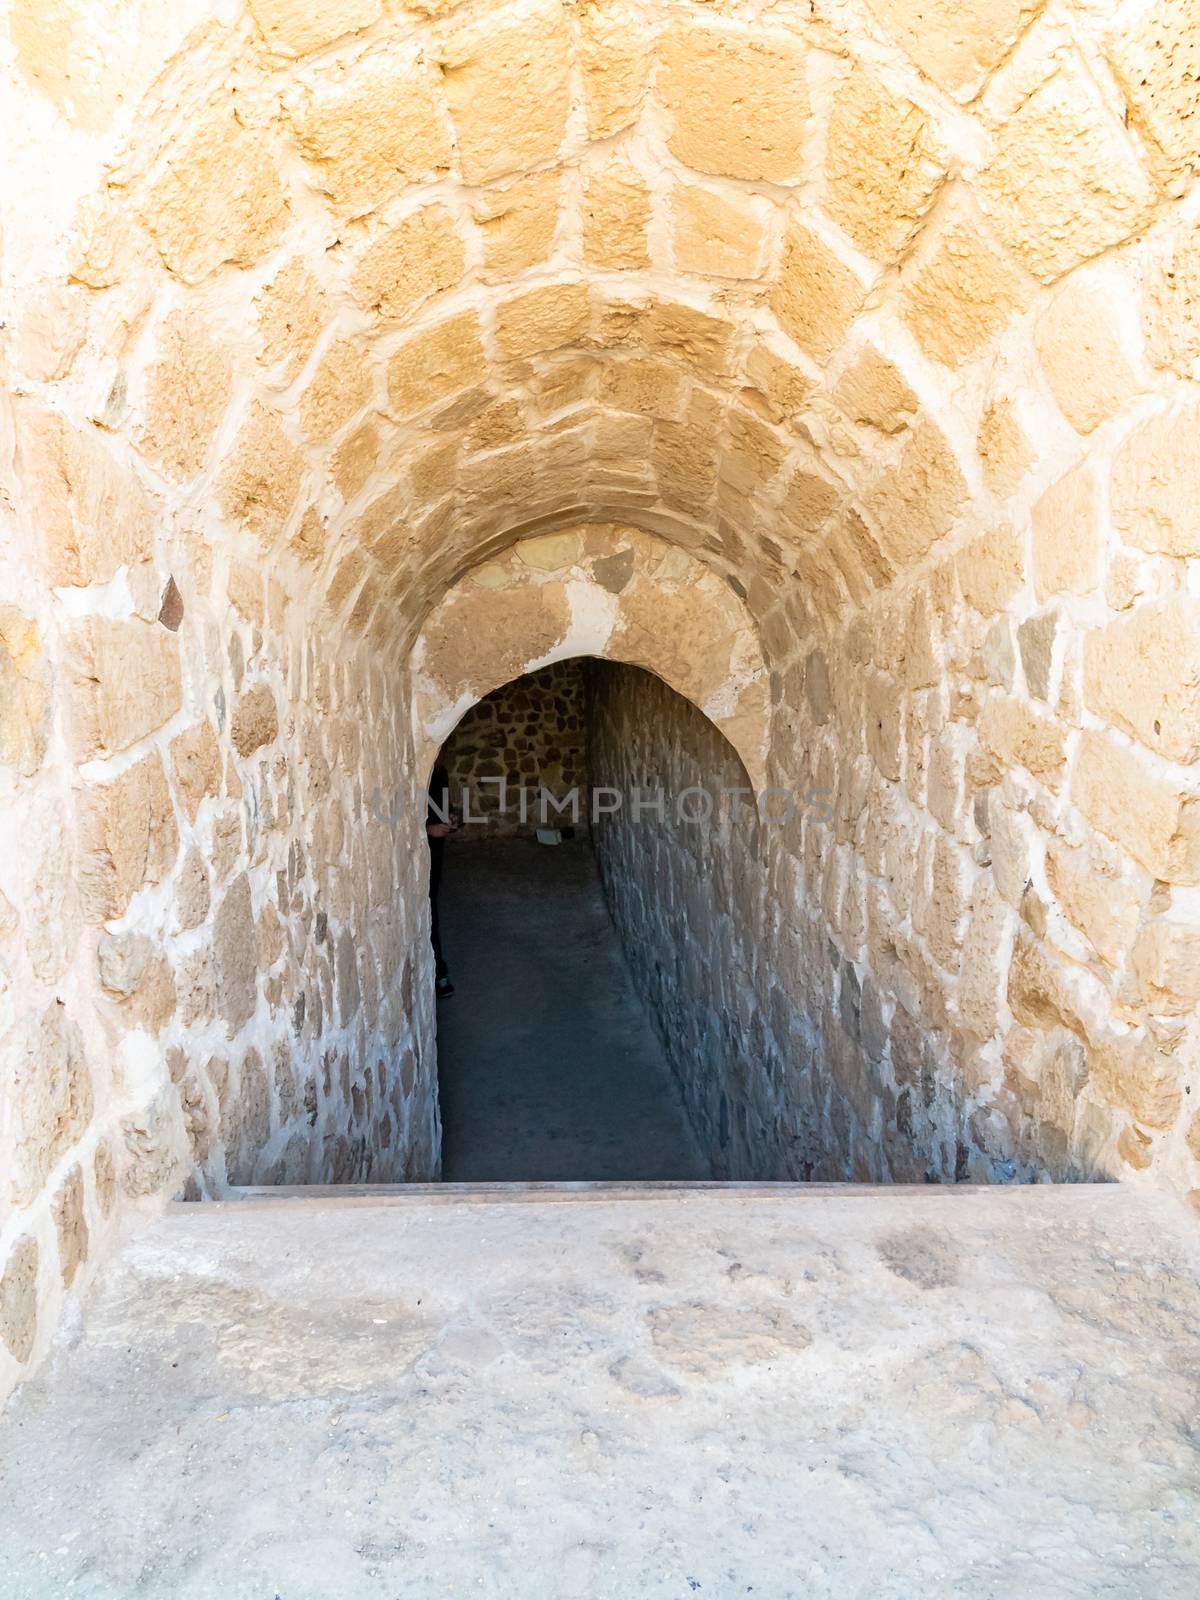 Fort of Bahrain ruin in Manama, Bahrain. Qal'at al-Bahrain Site Museum, UNESCO heritage, arched passage.